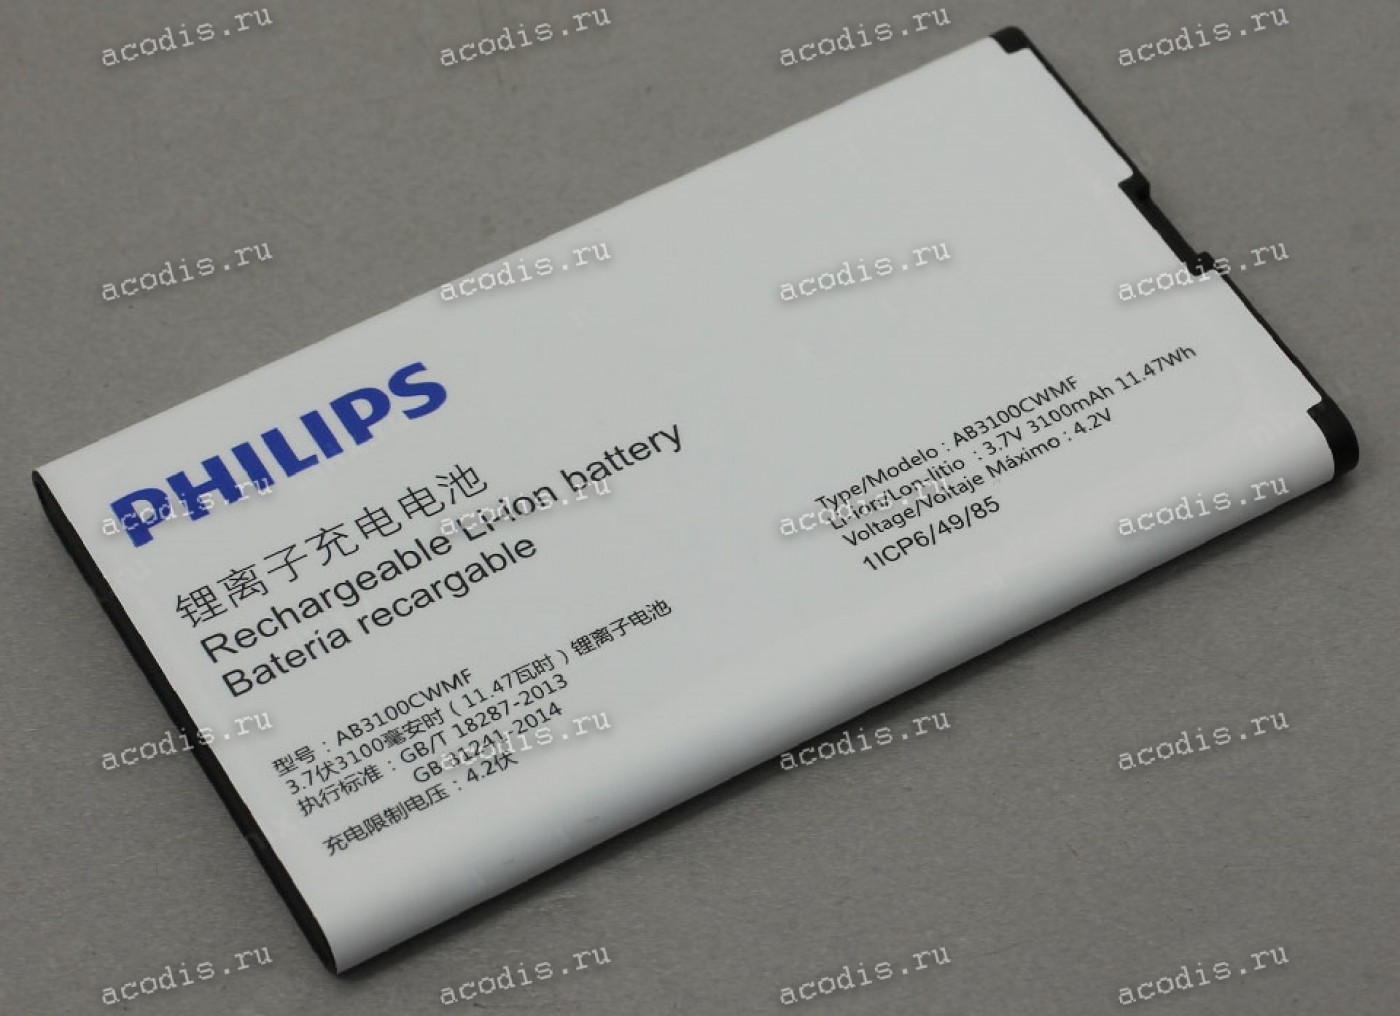 Аккумулятор для philips xenium. Philips Xenium e580. Телефон Philips Xenium e580. E580 Philips аккумулятор. Аккумулятор для телефона Philips e580 ab3100cwmf.